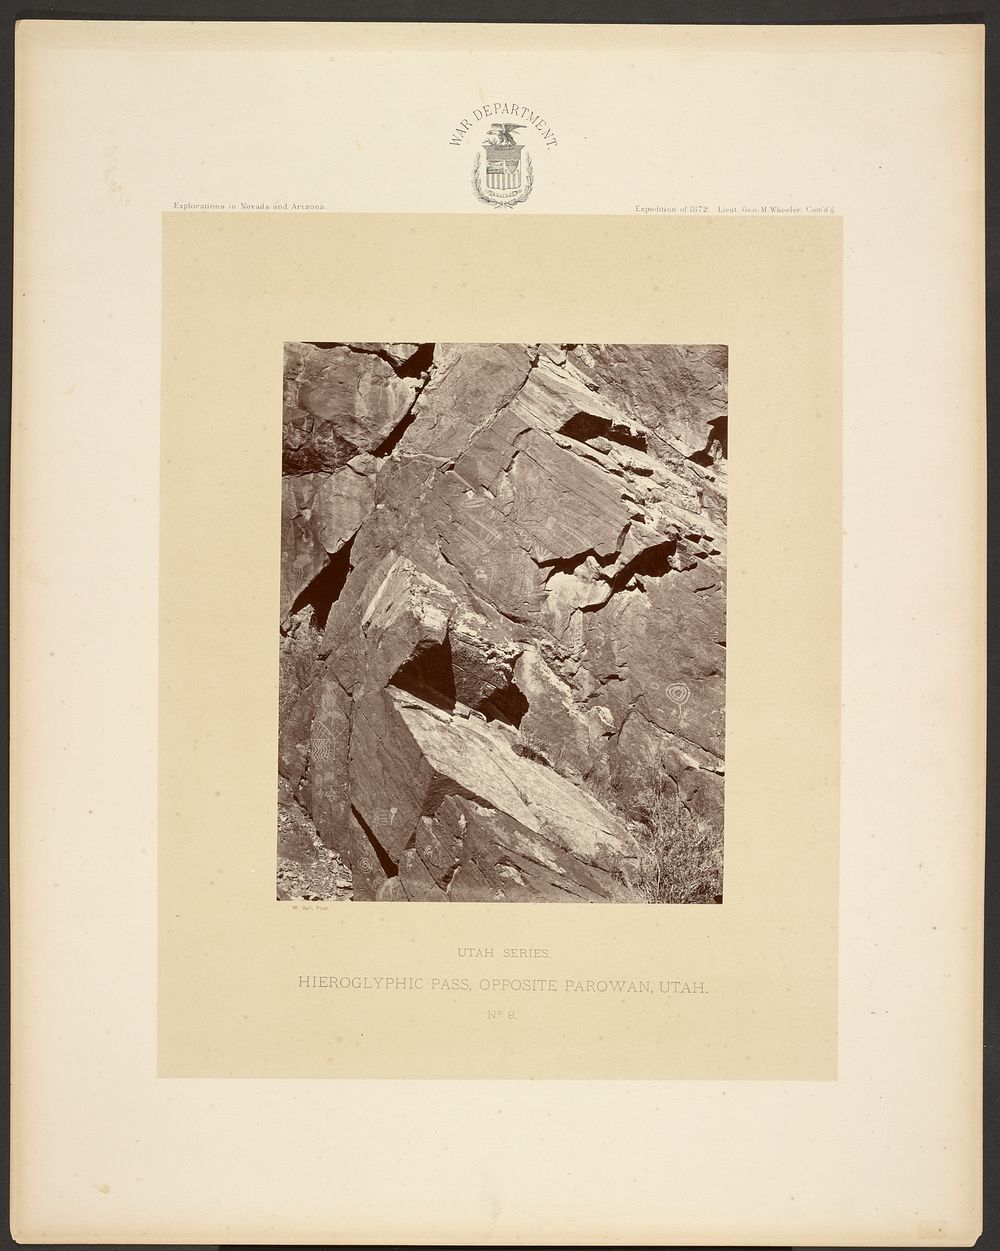 Hieroglyphic Pass, Opposite Parowan, Utah by William H Bell